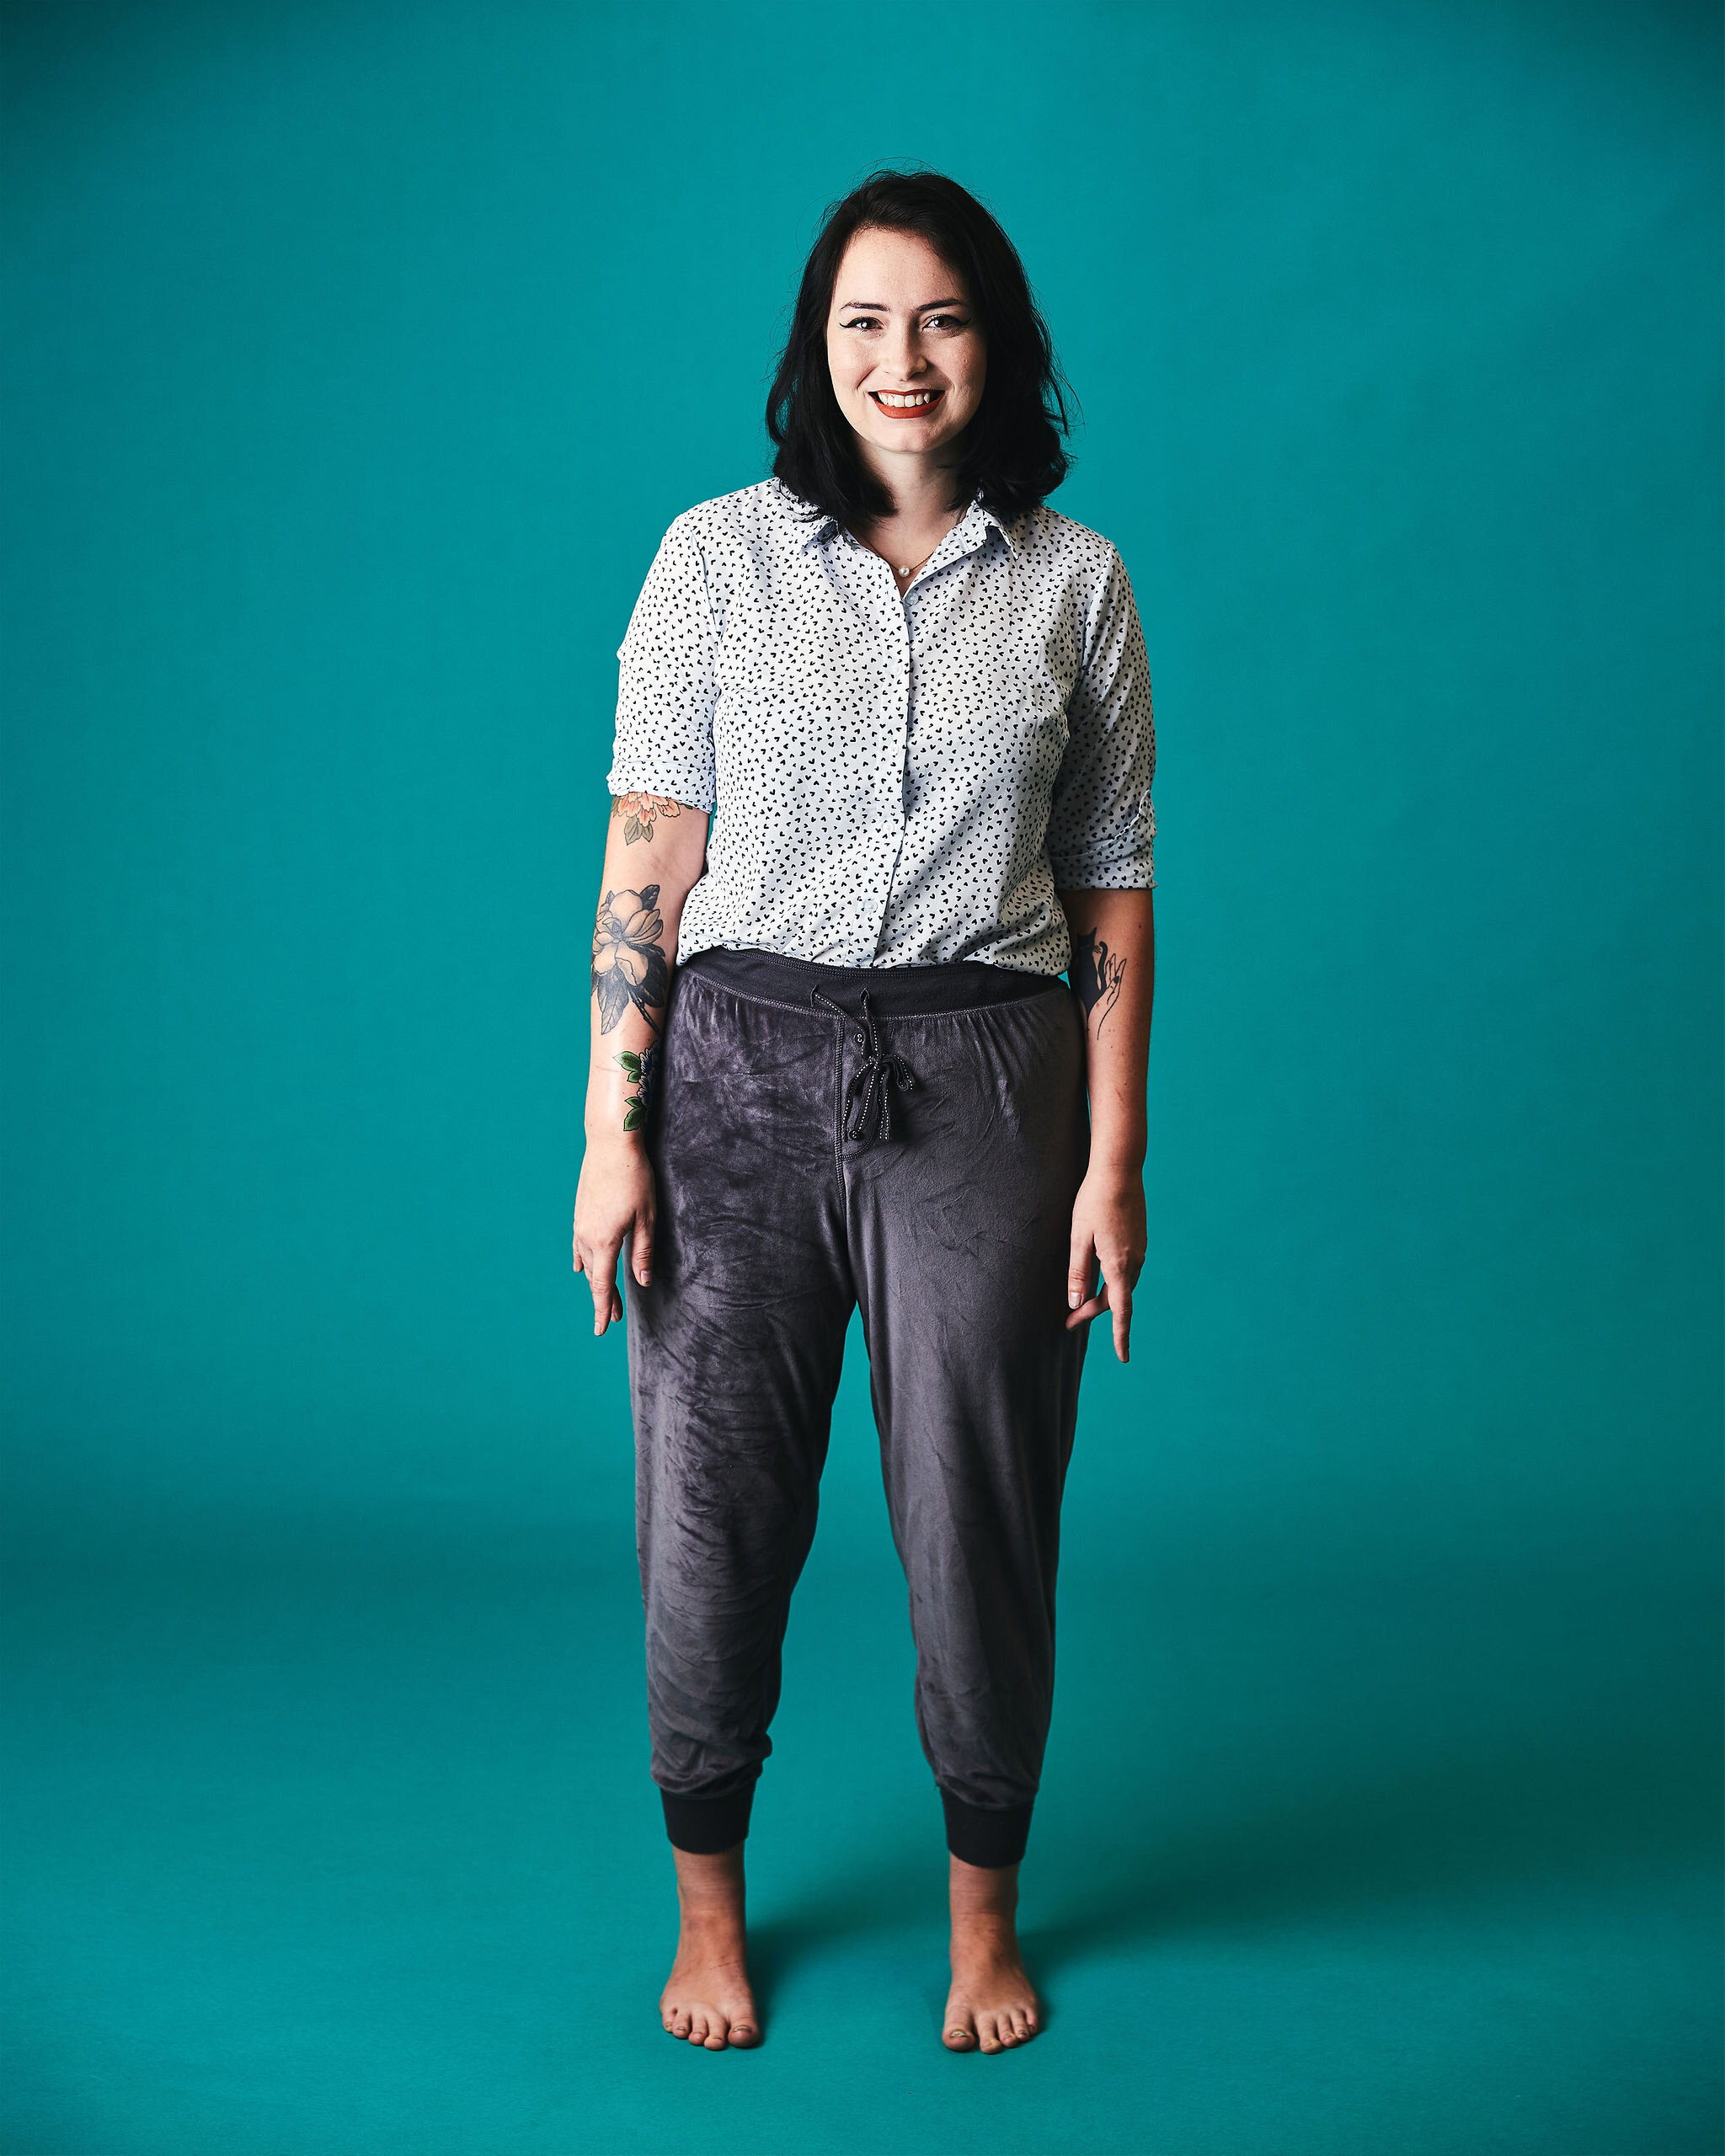 Meet Katie Logue // COVIDwear